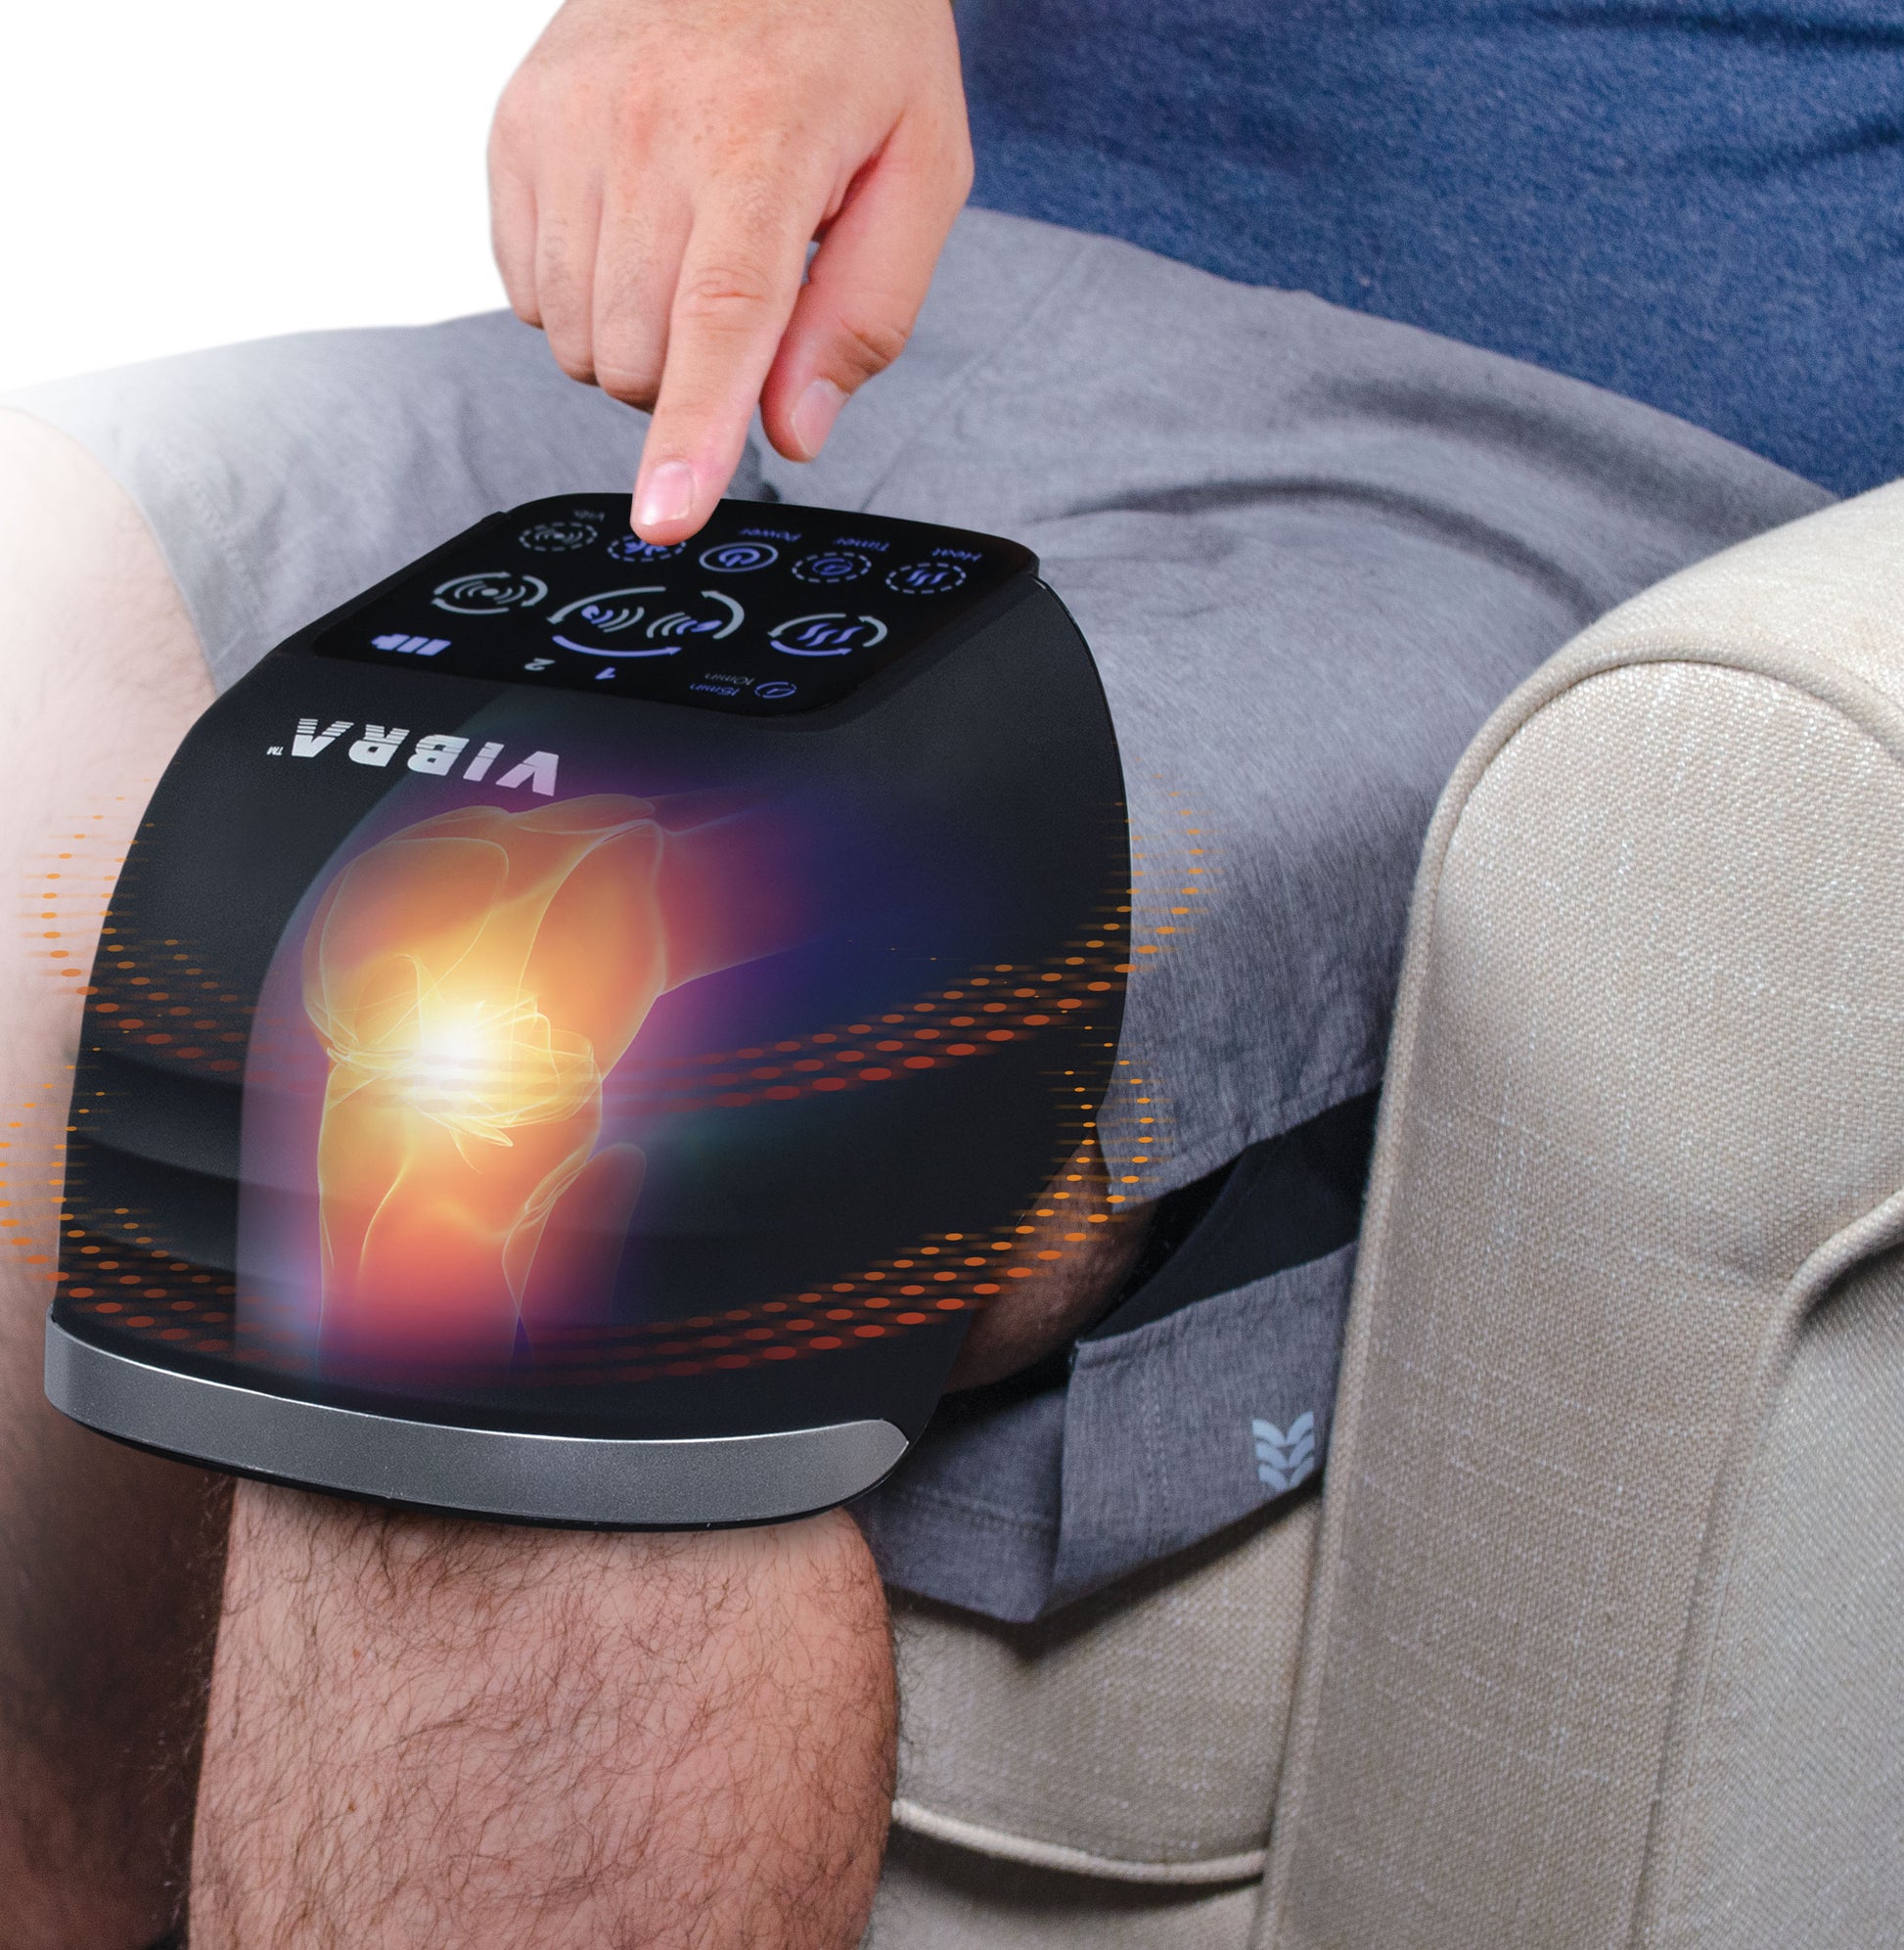 Cordless Vibration Knee Massager with 3 Adjustable Heat & 3 Intensitie